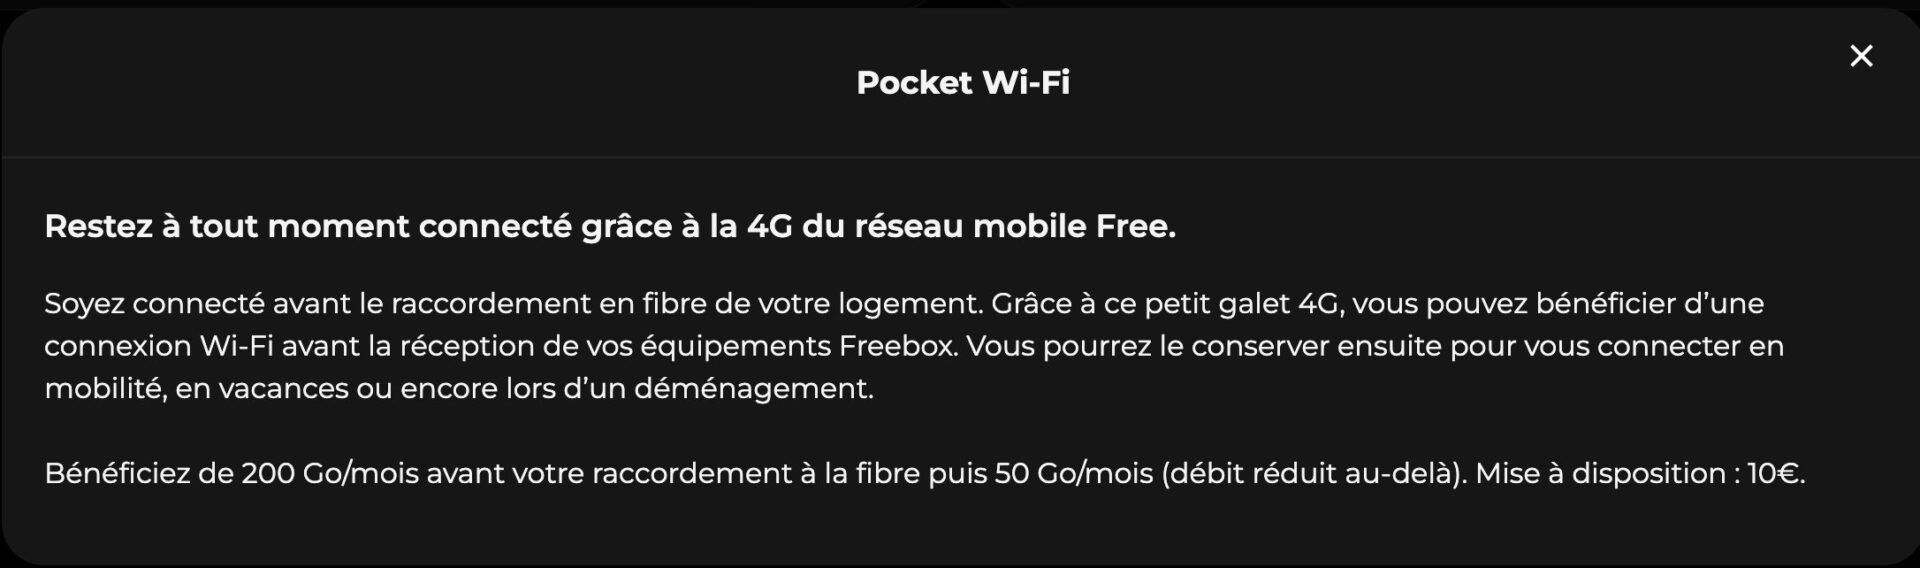 Conditions Pocket Wi Fi Freebox Ultra